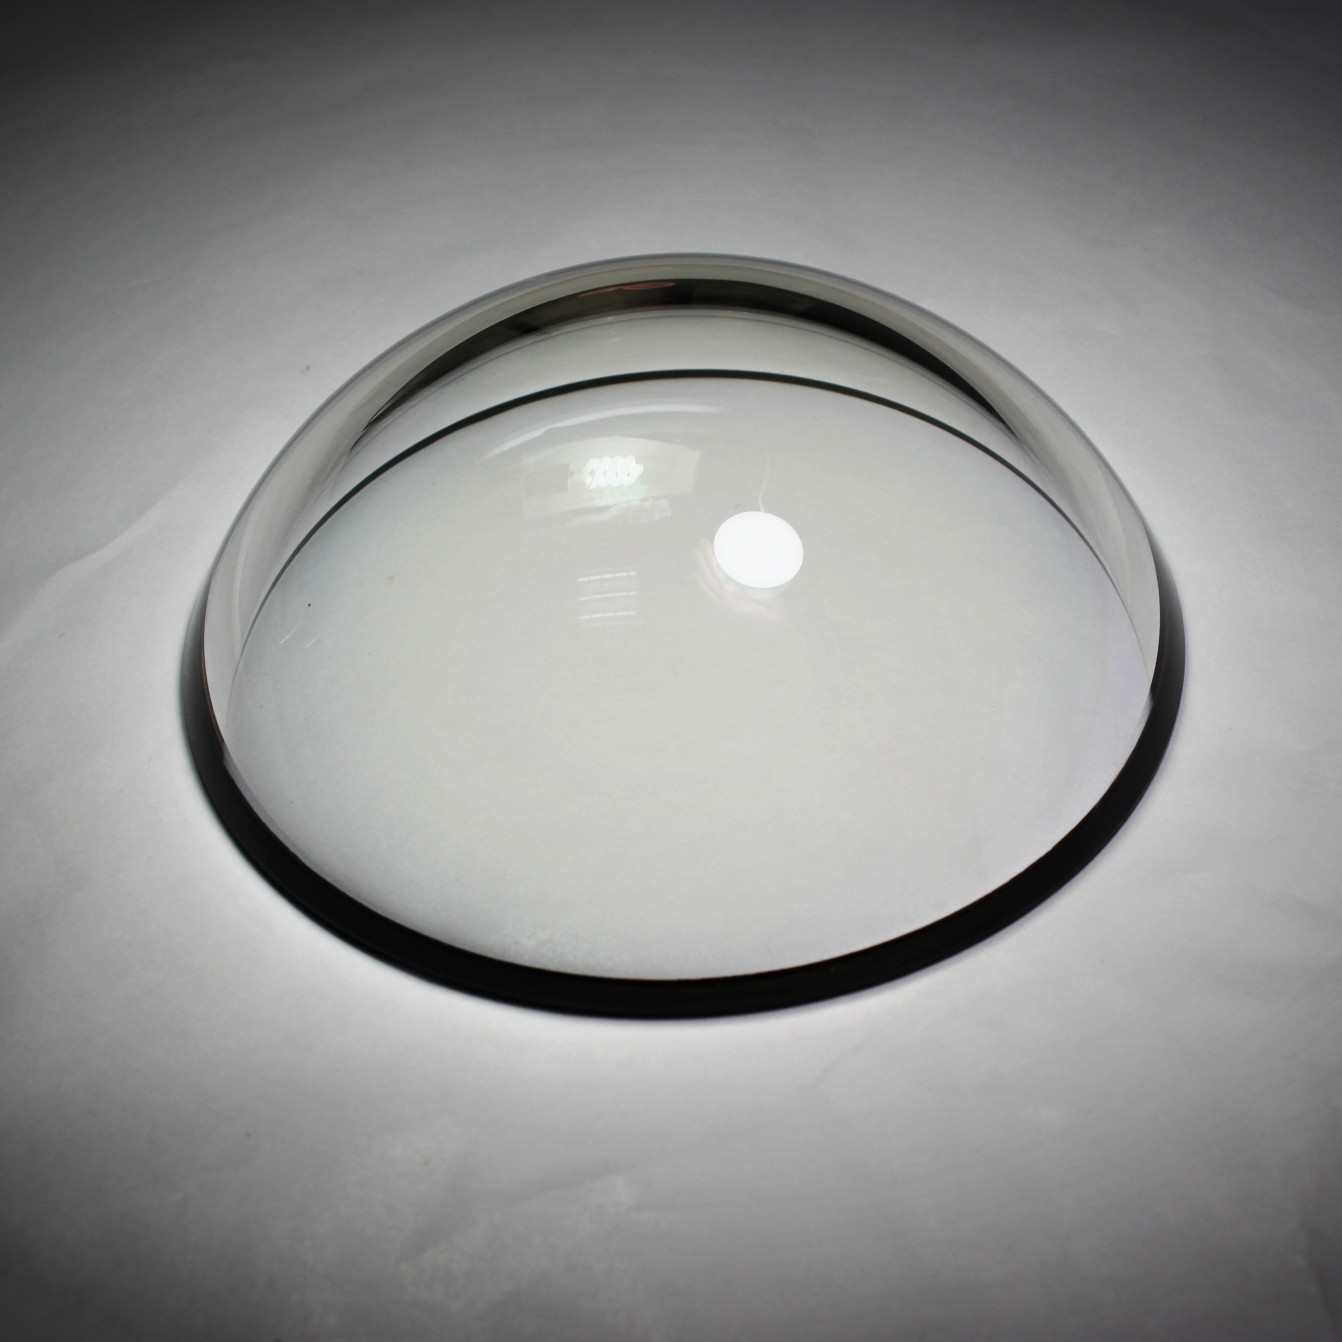 Ultraviolet (UV) Dome Lens